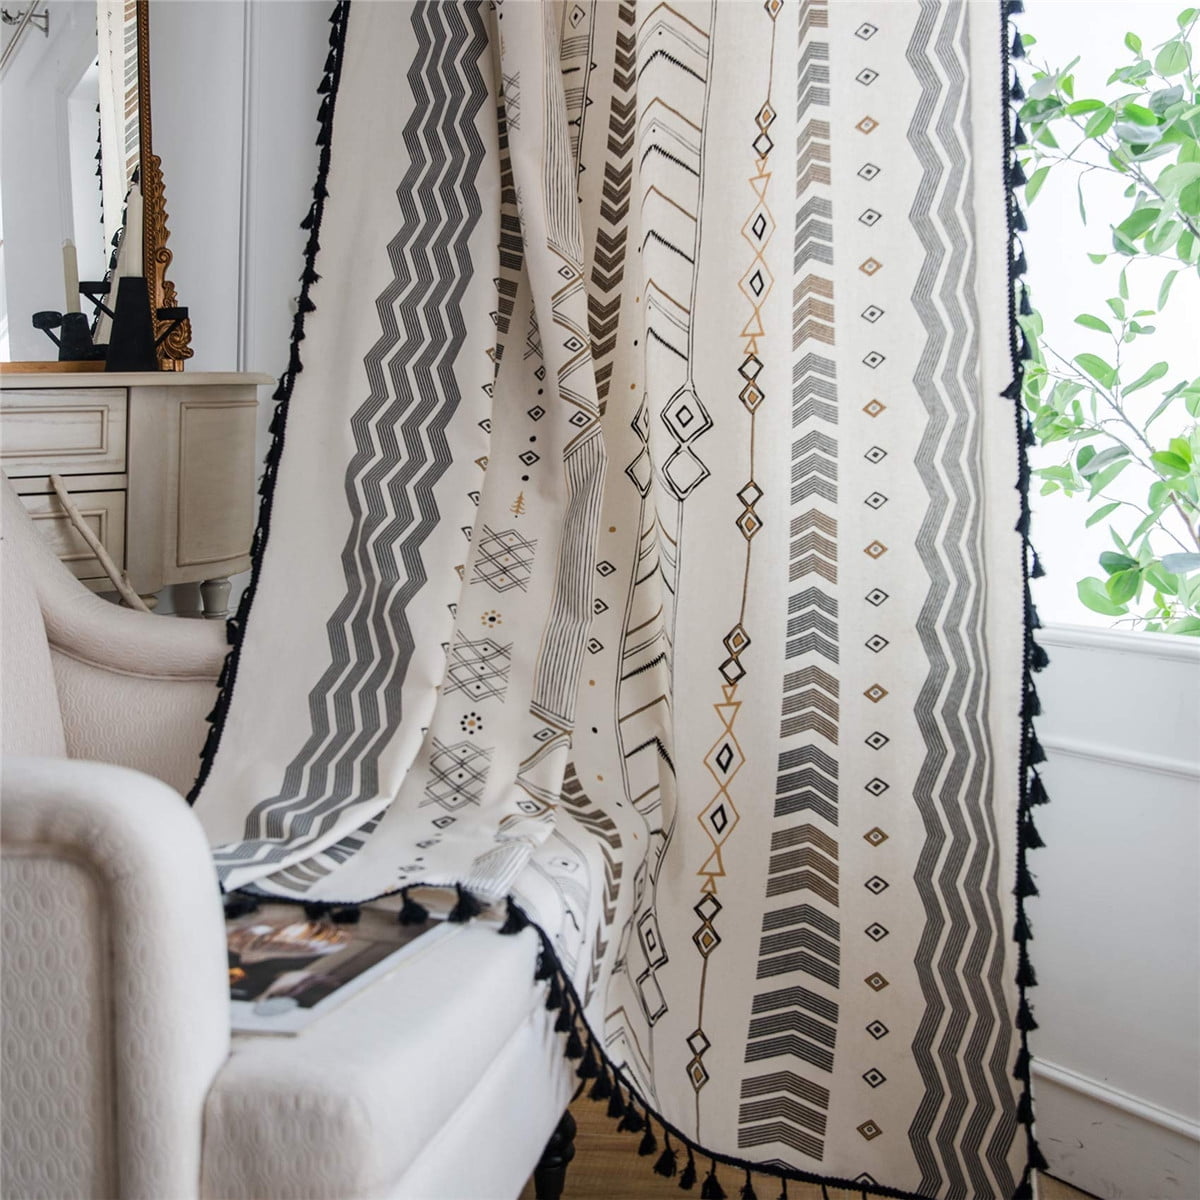 Details about   Boho Curtains Bedroom Ethnic Living Room Window Treatment Drapes Cotton Linen 